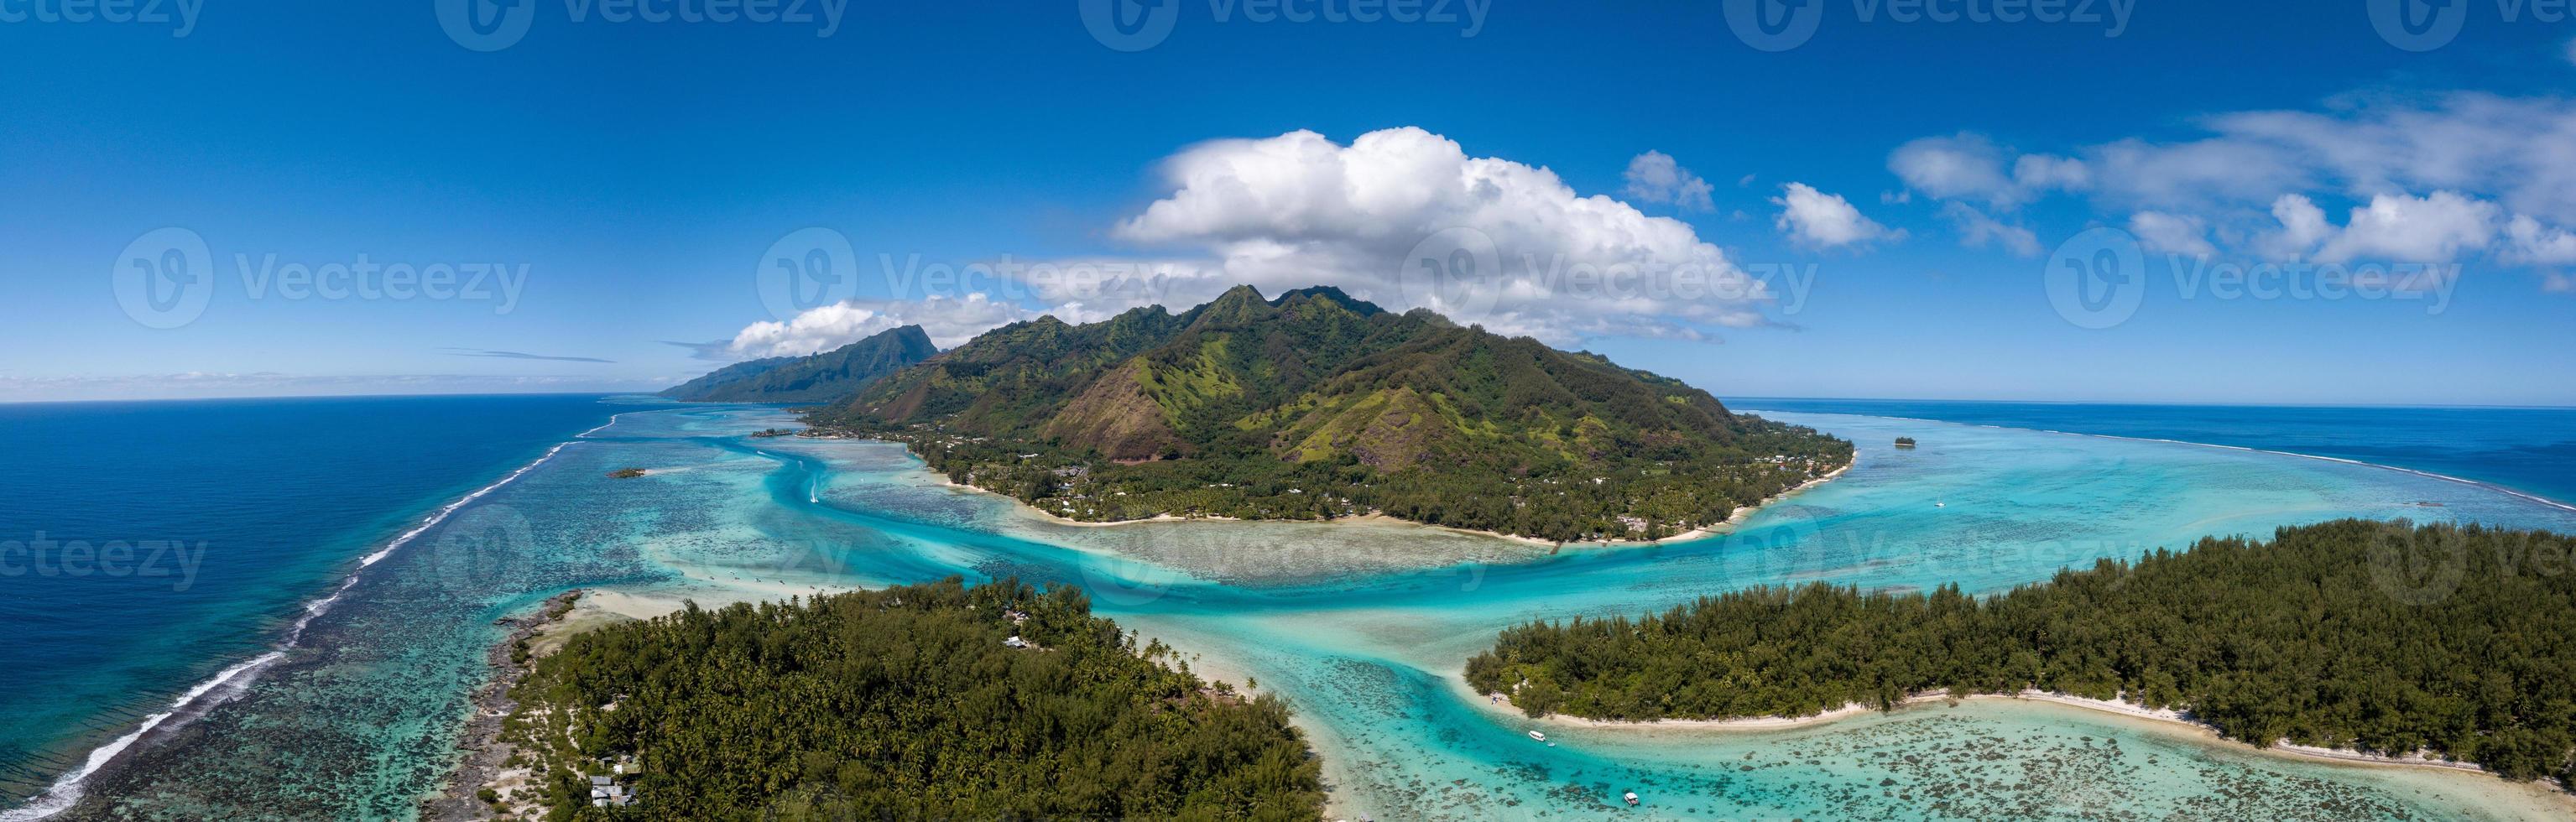 vista aérea de la laguna de la polinesia francesa de la isla de moorea y tahití foto